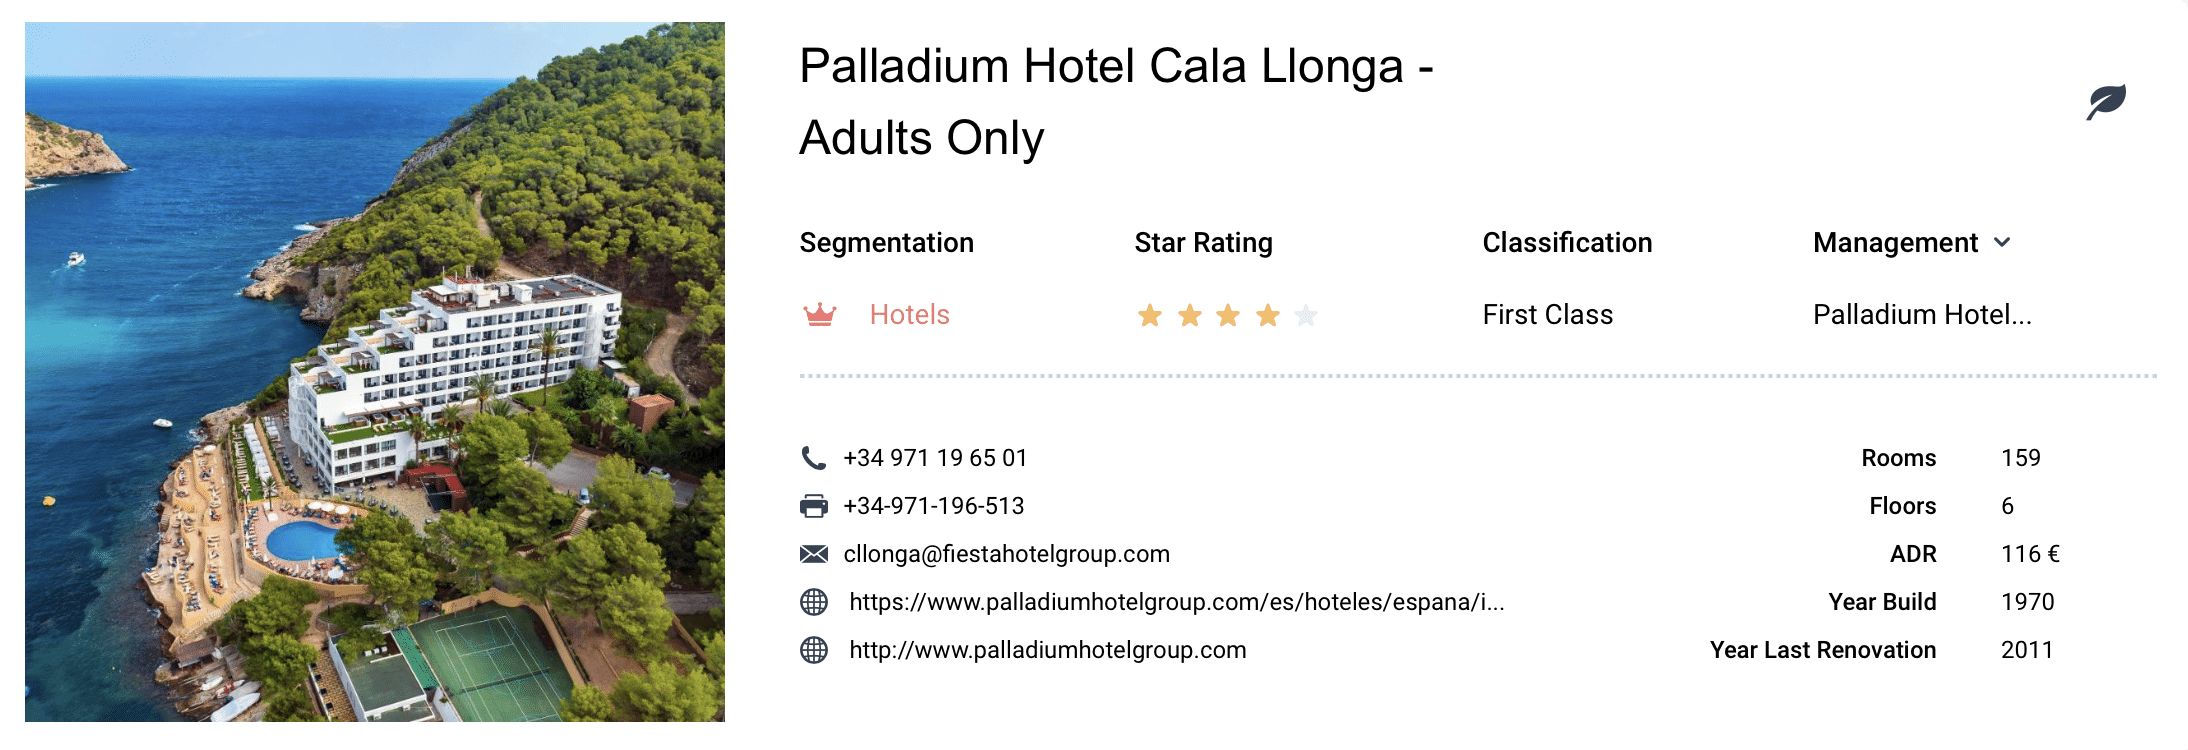 Palladium Hotel Cala Lionga Example